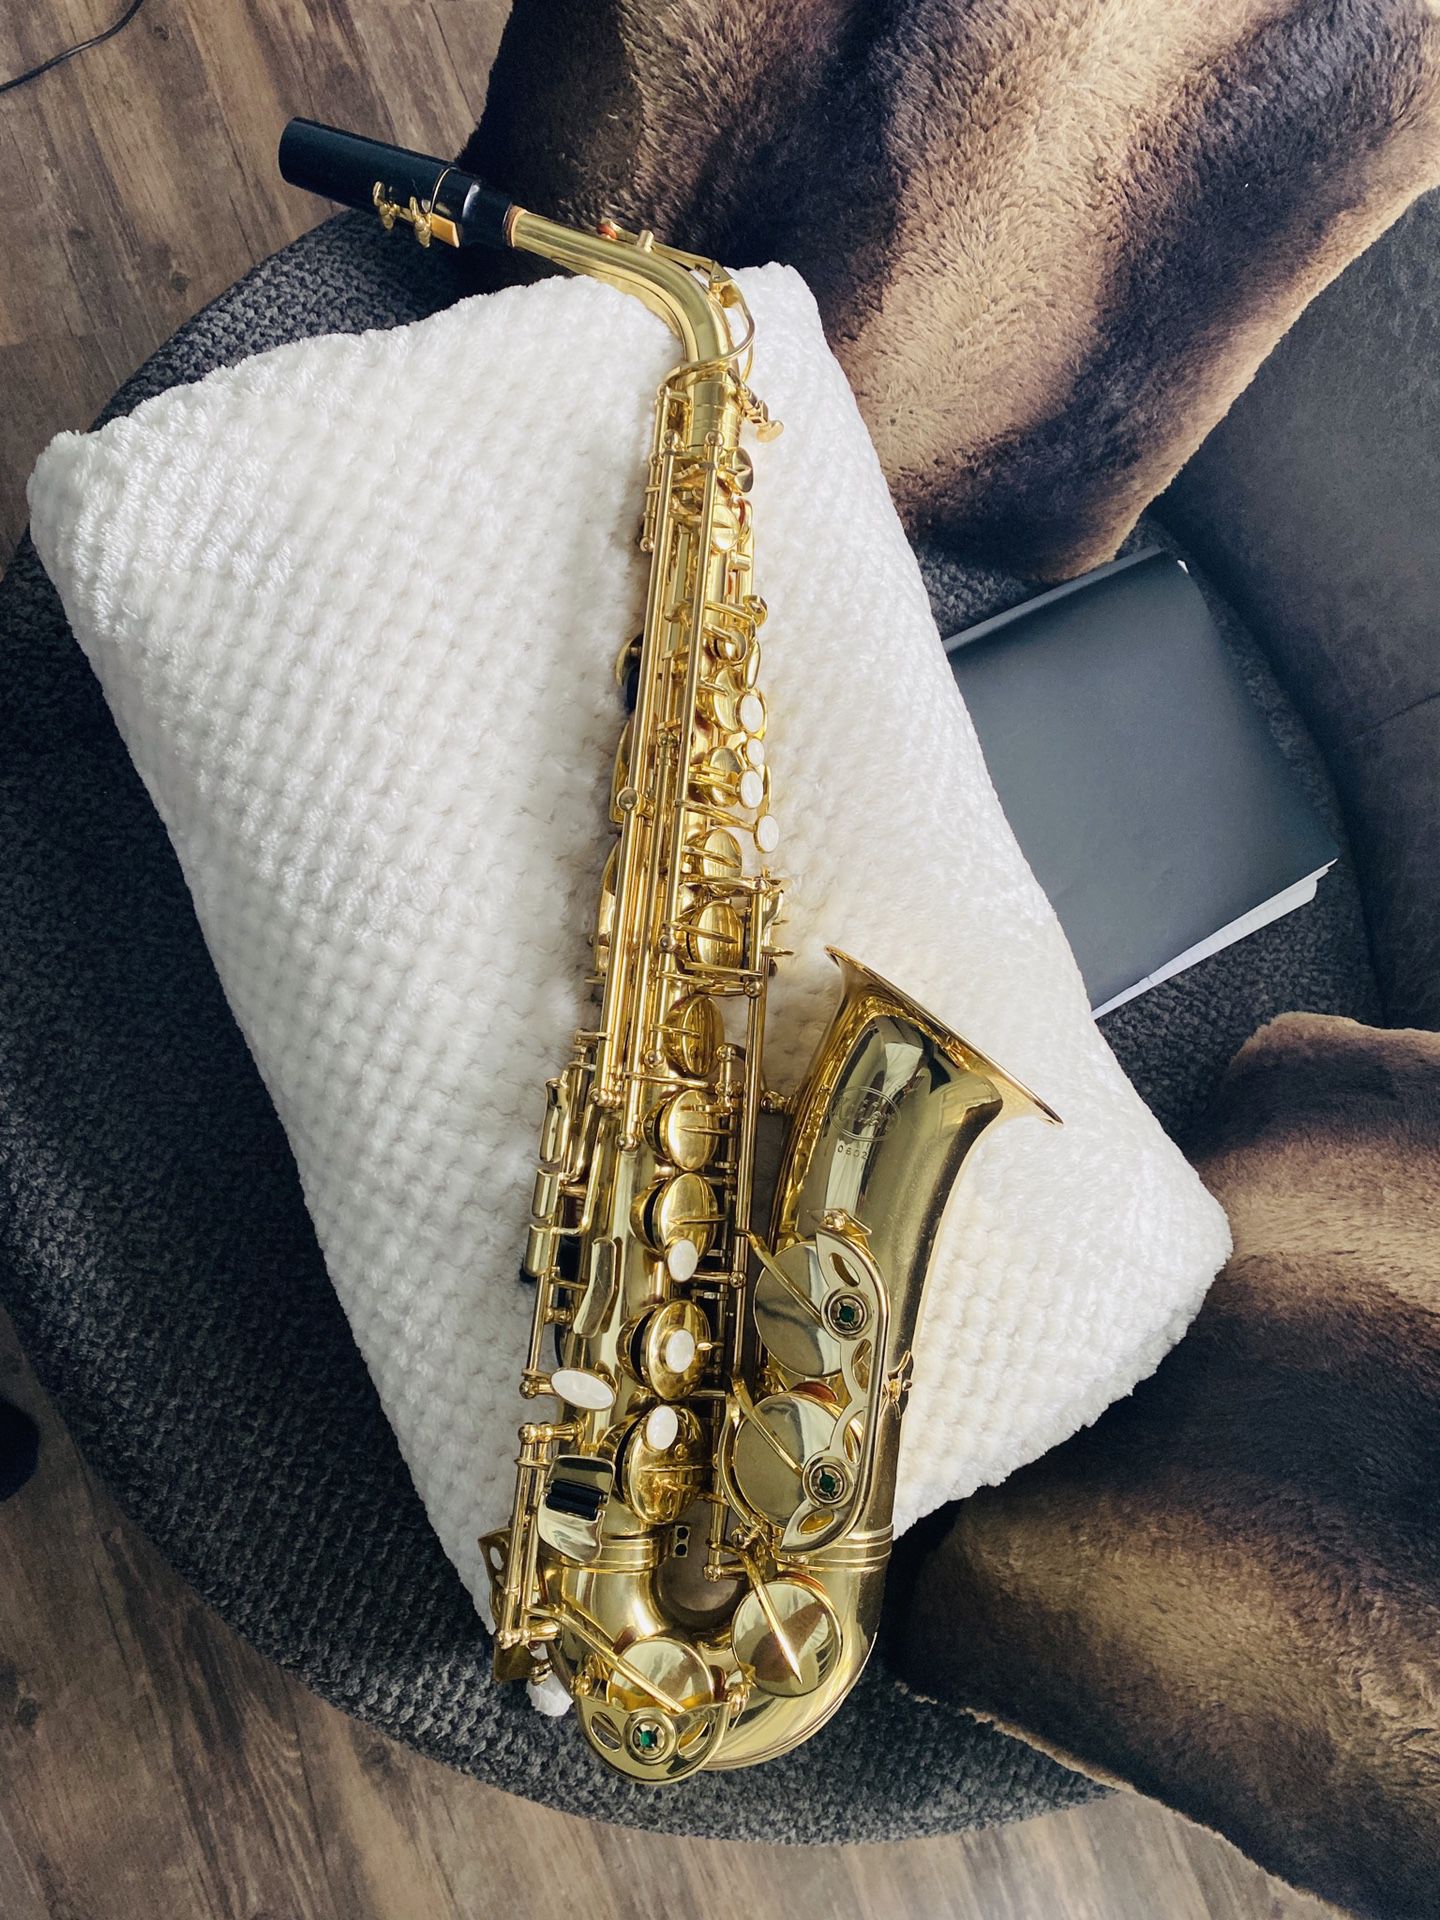 Kohlert Aalto Saxophone